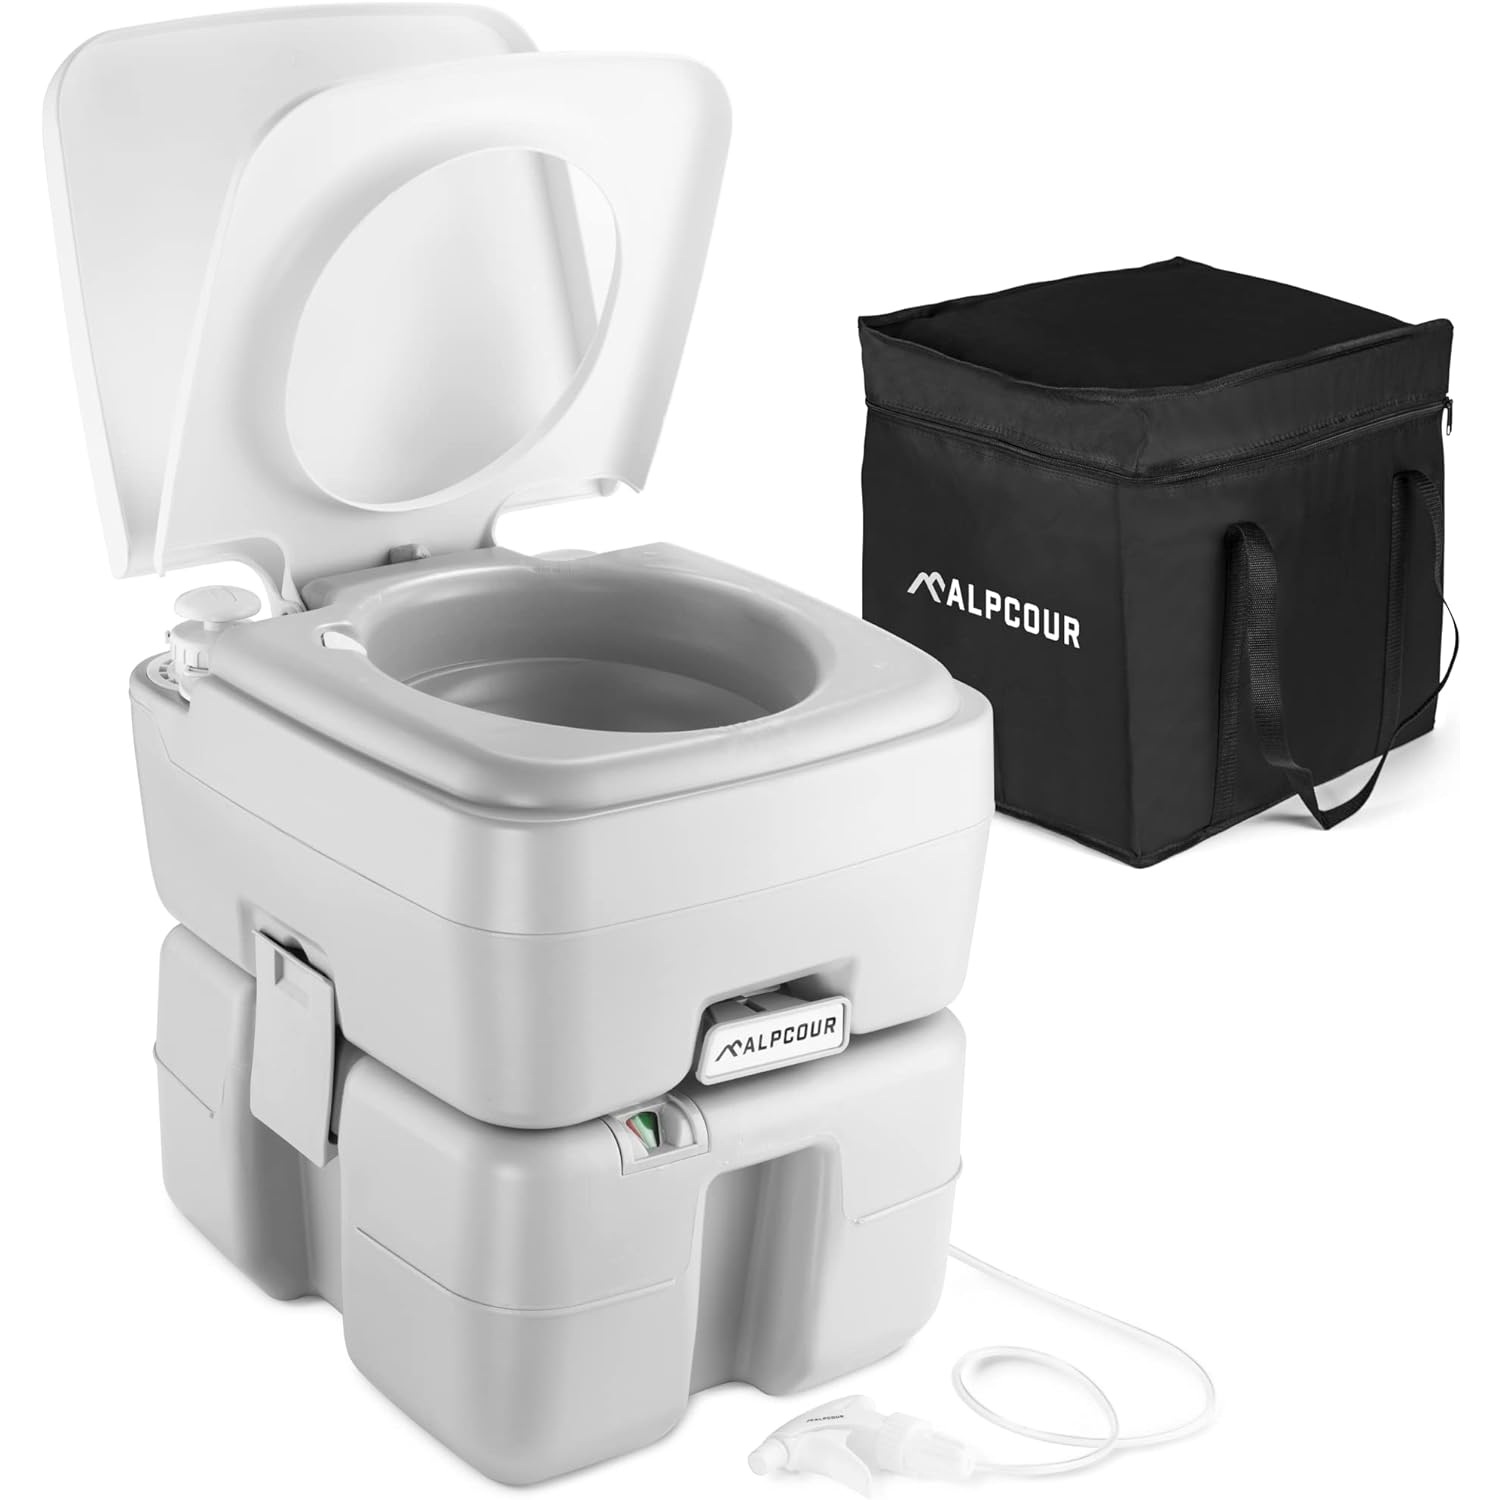 Alpcour Portable Toilet – 5.3 Gallon, Piston Pump Flush, Washing Sprayer